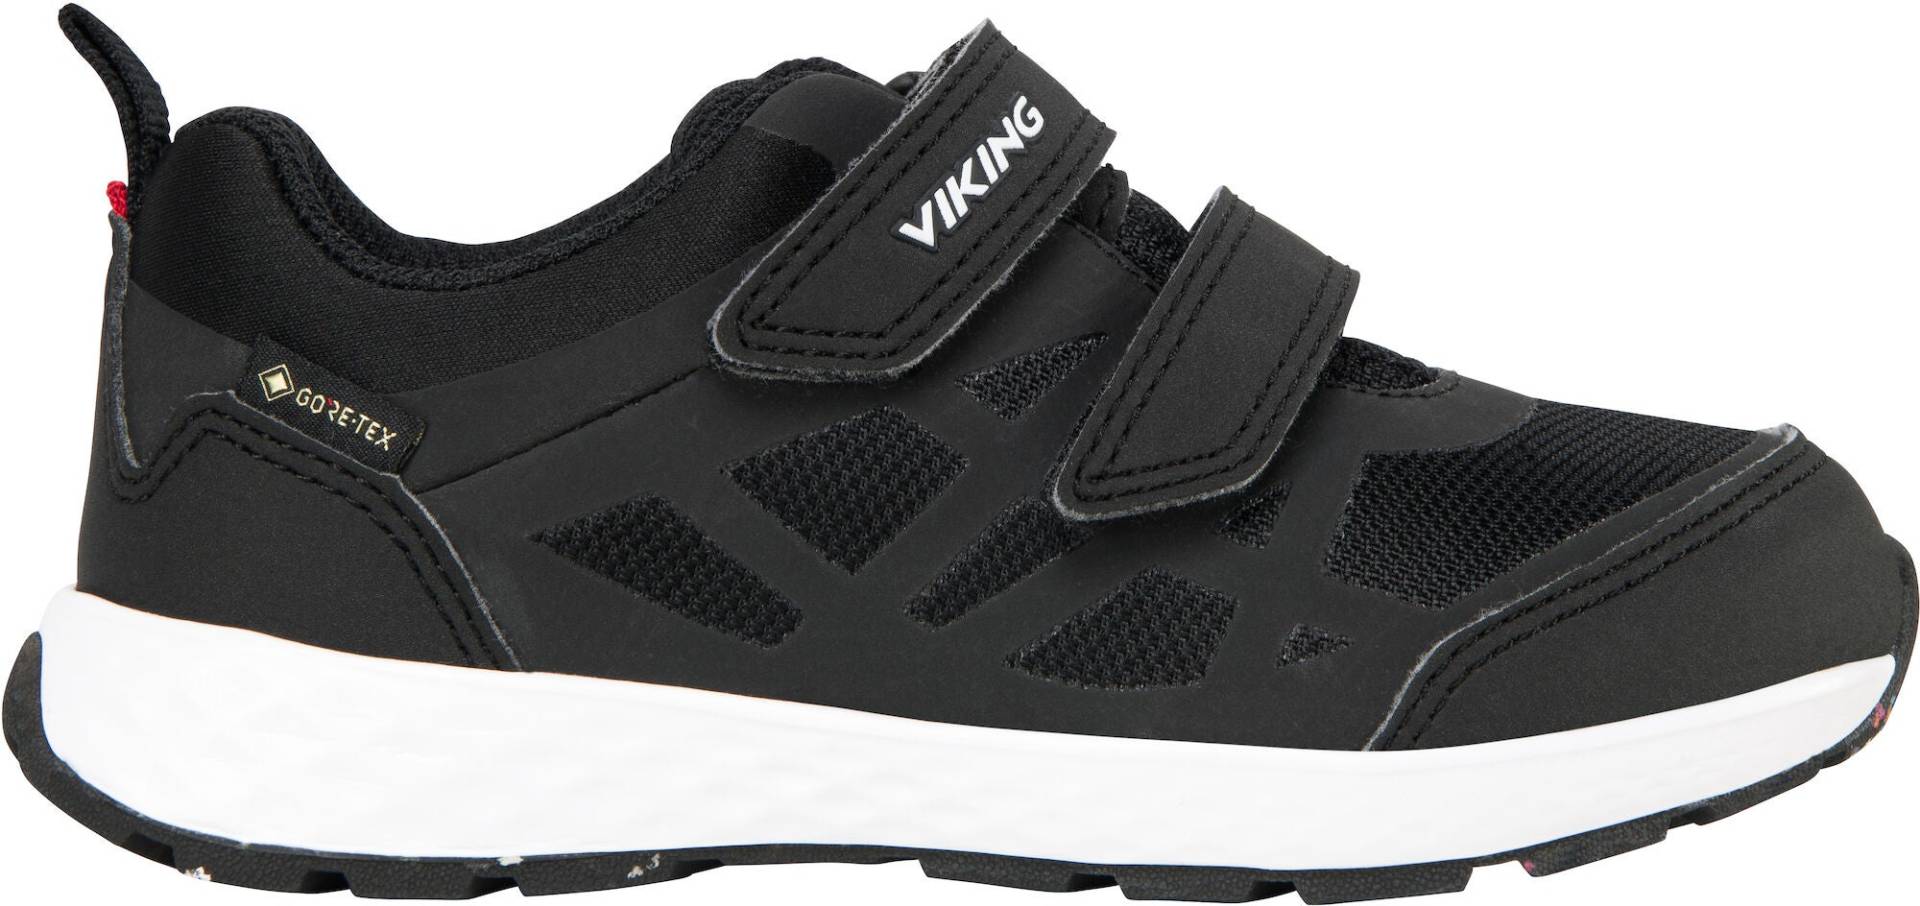 Viking Veme Reflex 2V GTX Kinder Sneakers, Black, 32, Kinderschuhe von Viking Footwear